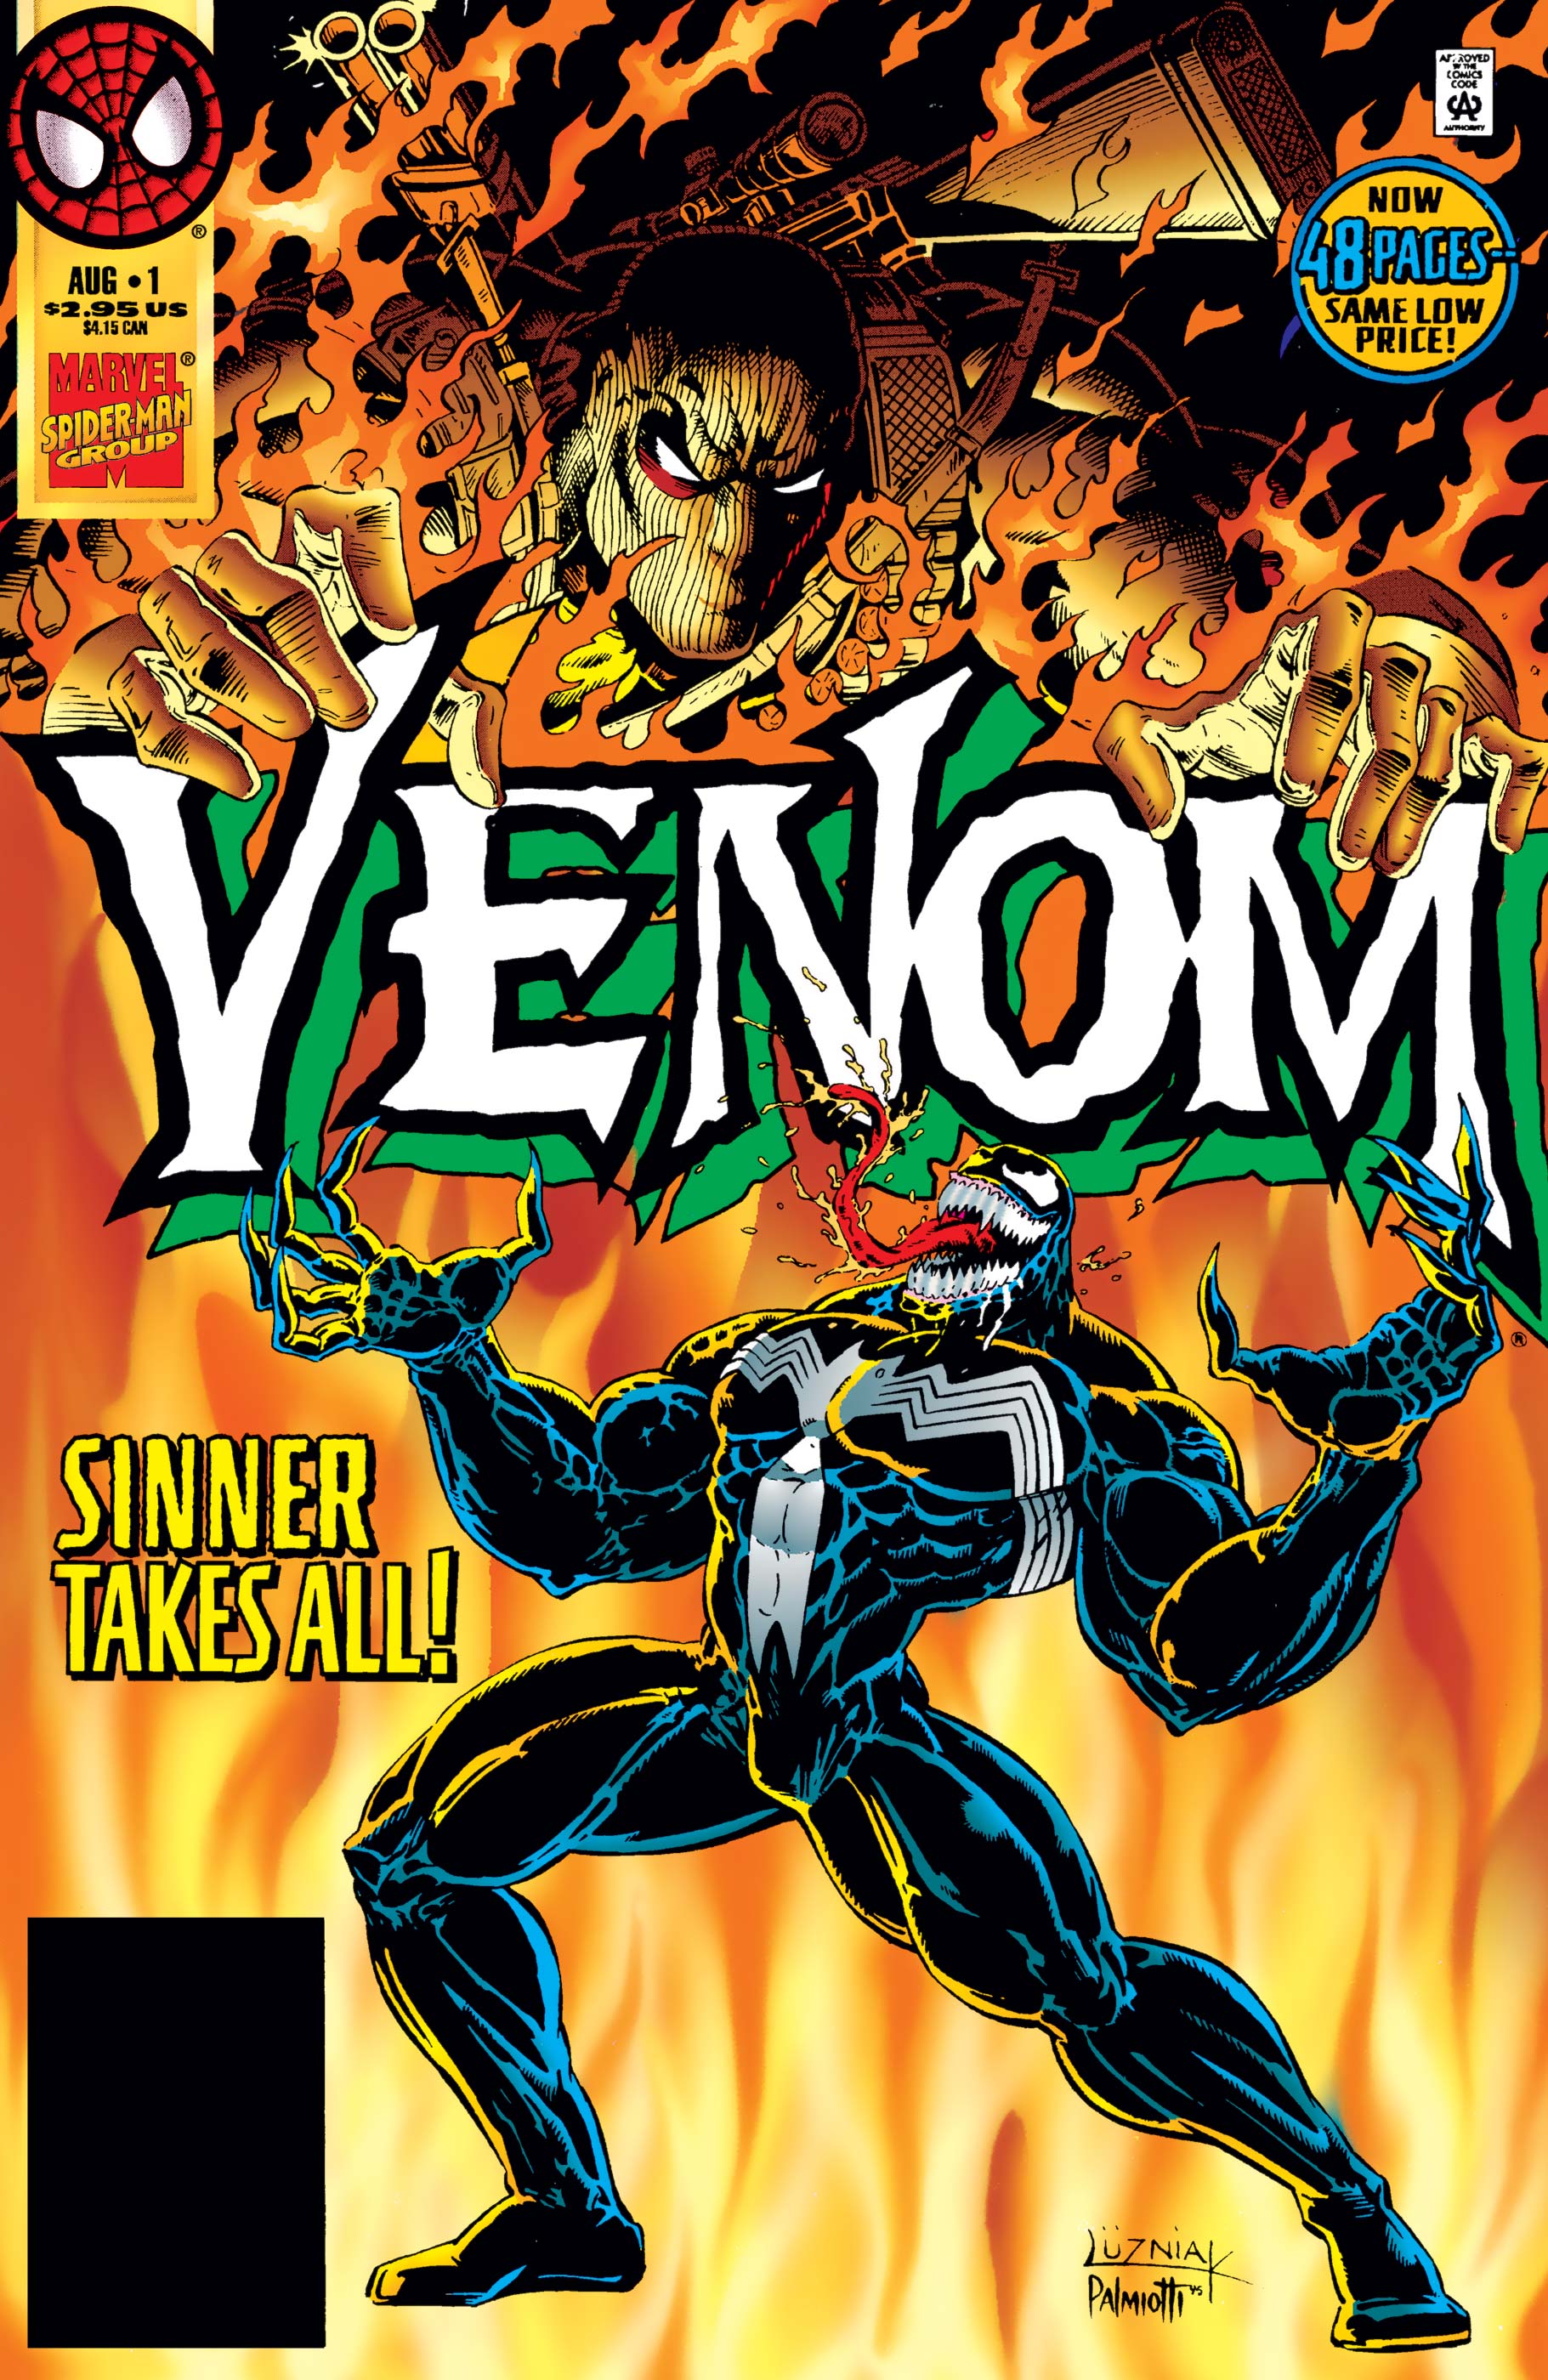 Venom: Sinner Takes All (1995) #1